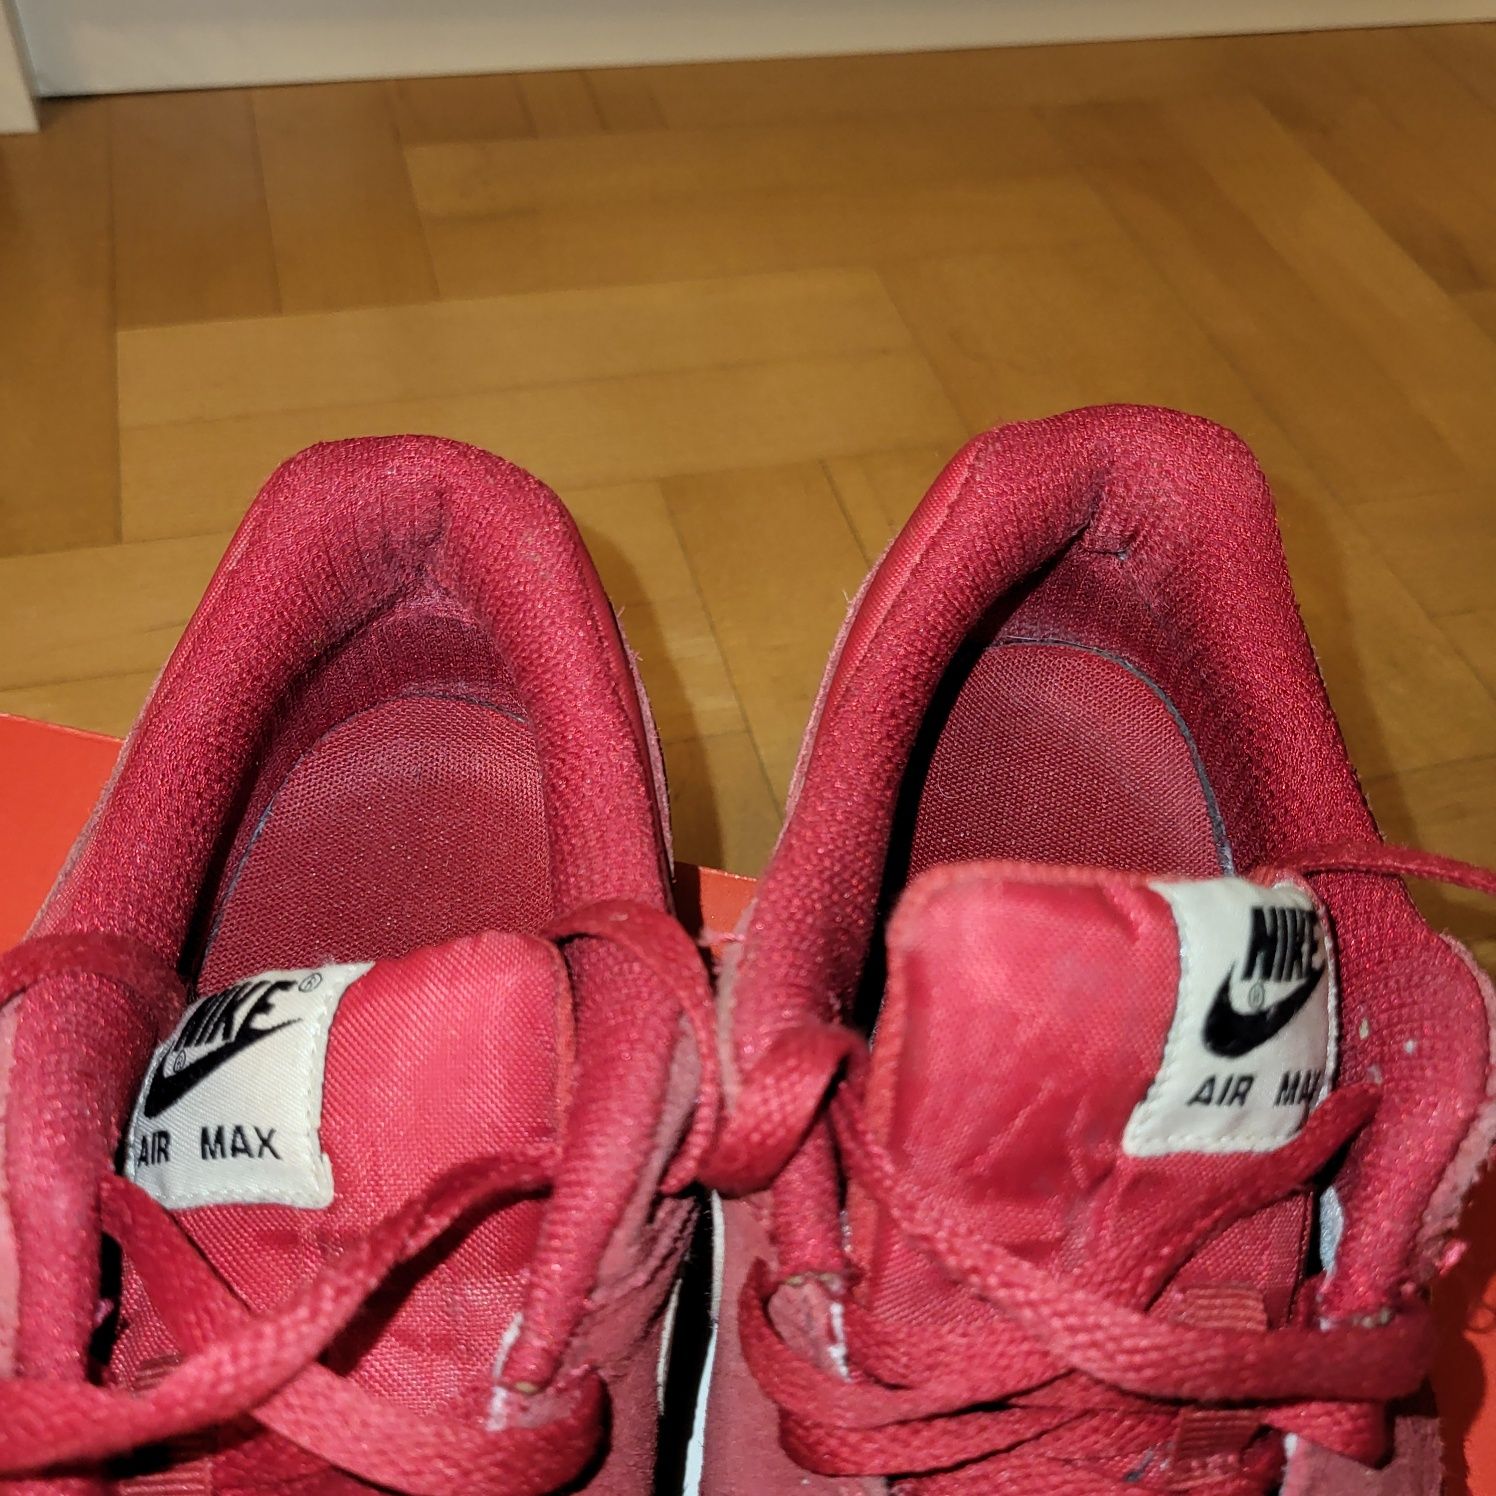 Nike Air Max 1 One roz. 40 25 cm 6 UK